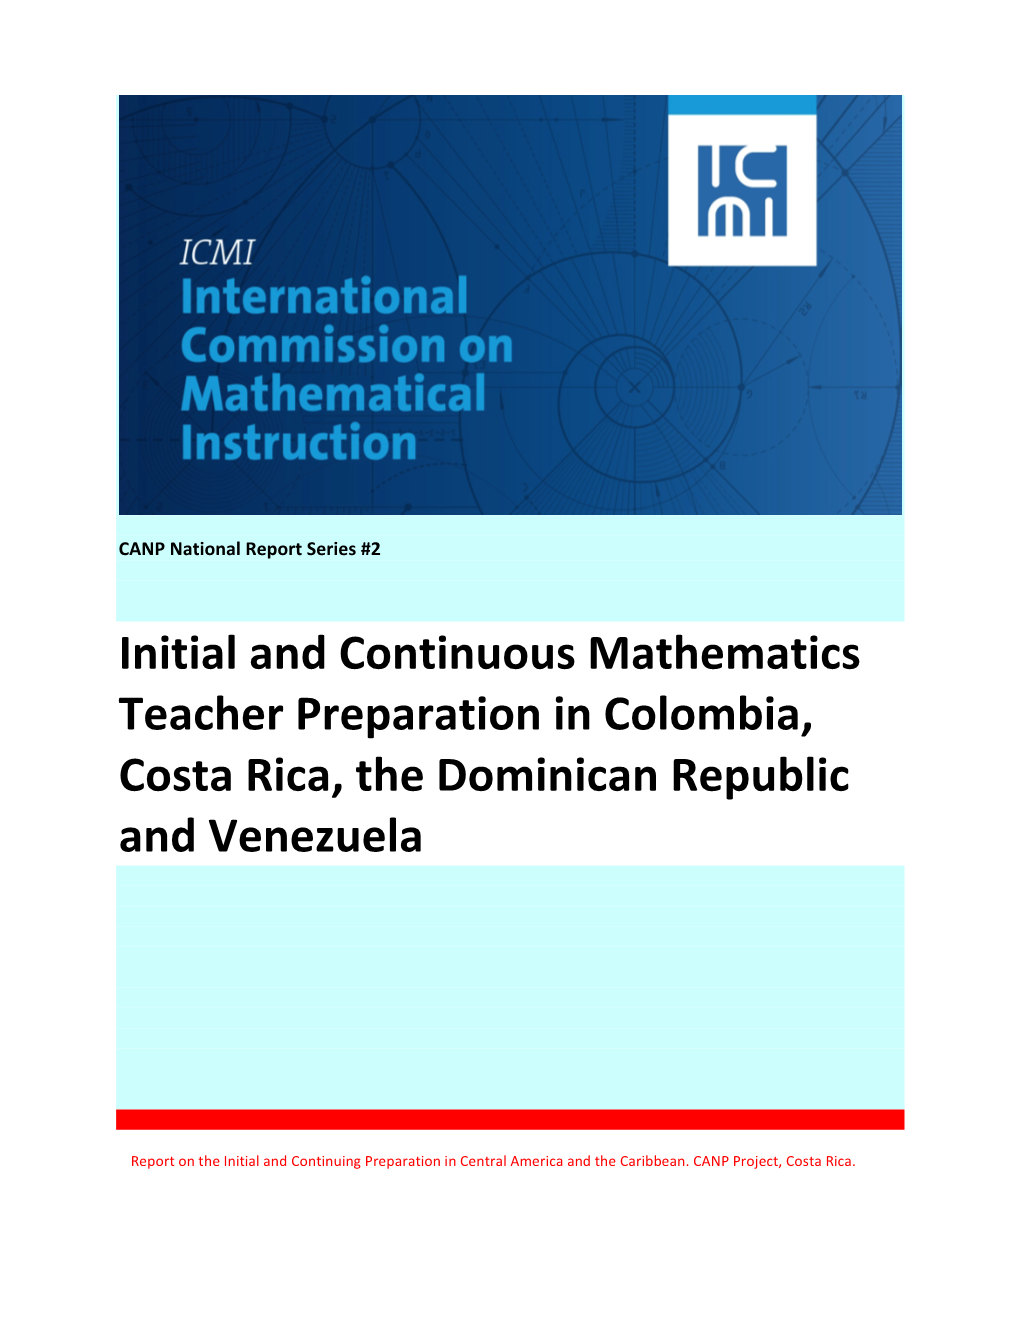 Initial and Continuous Mathematics Teacher Preparation in Colombia, Costa Rica, the Dominican Republic and Venezuela